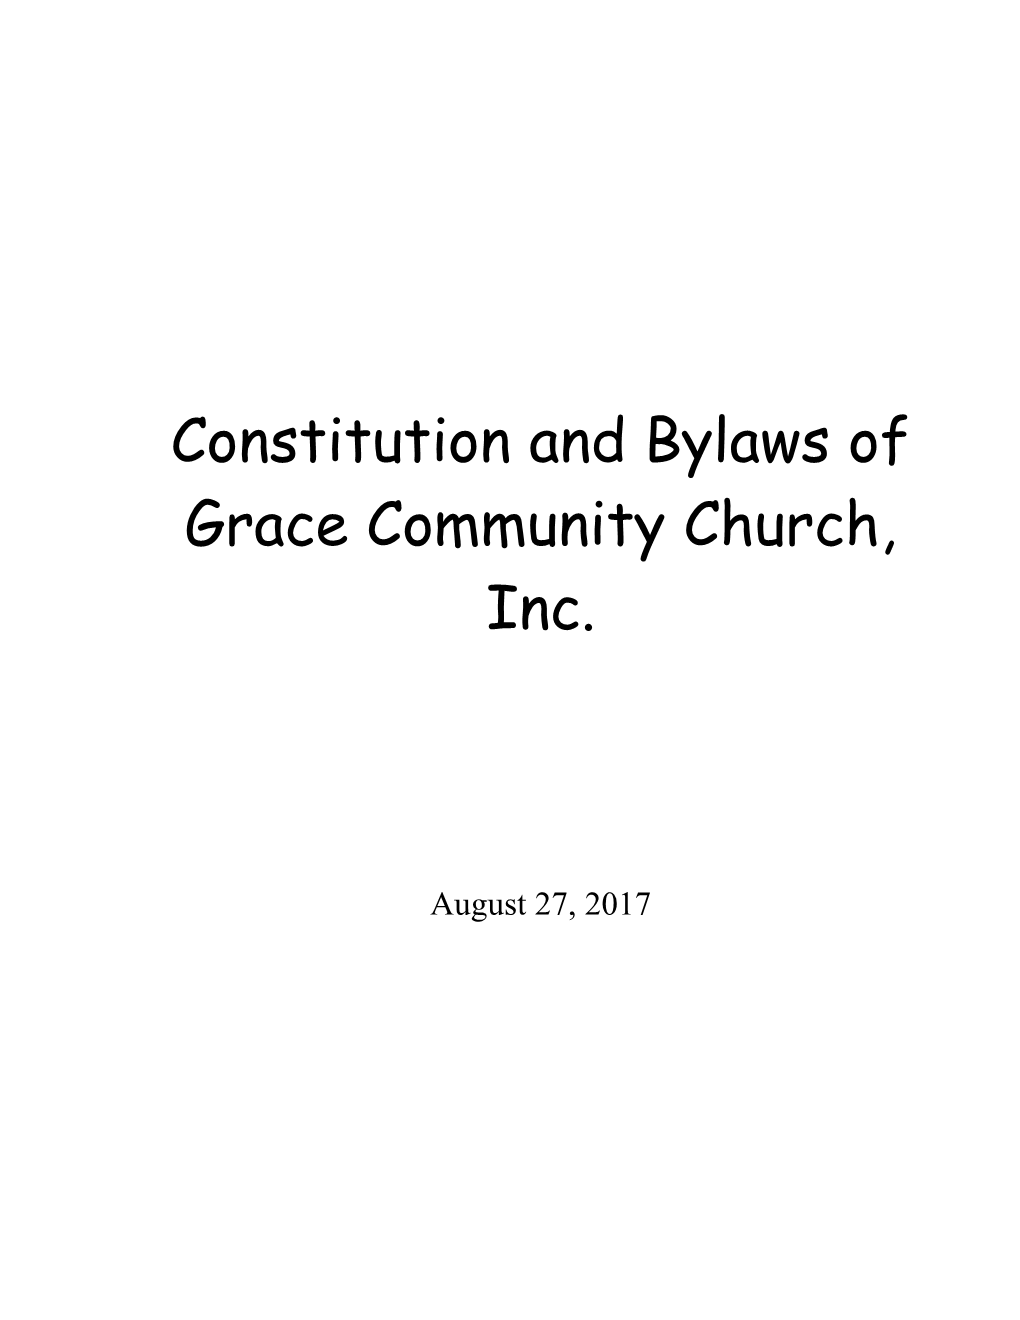 Grace Community Church, Inc